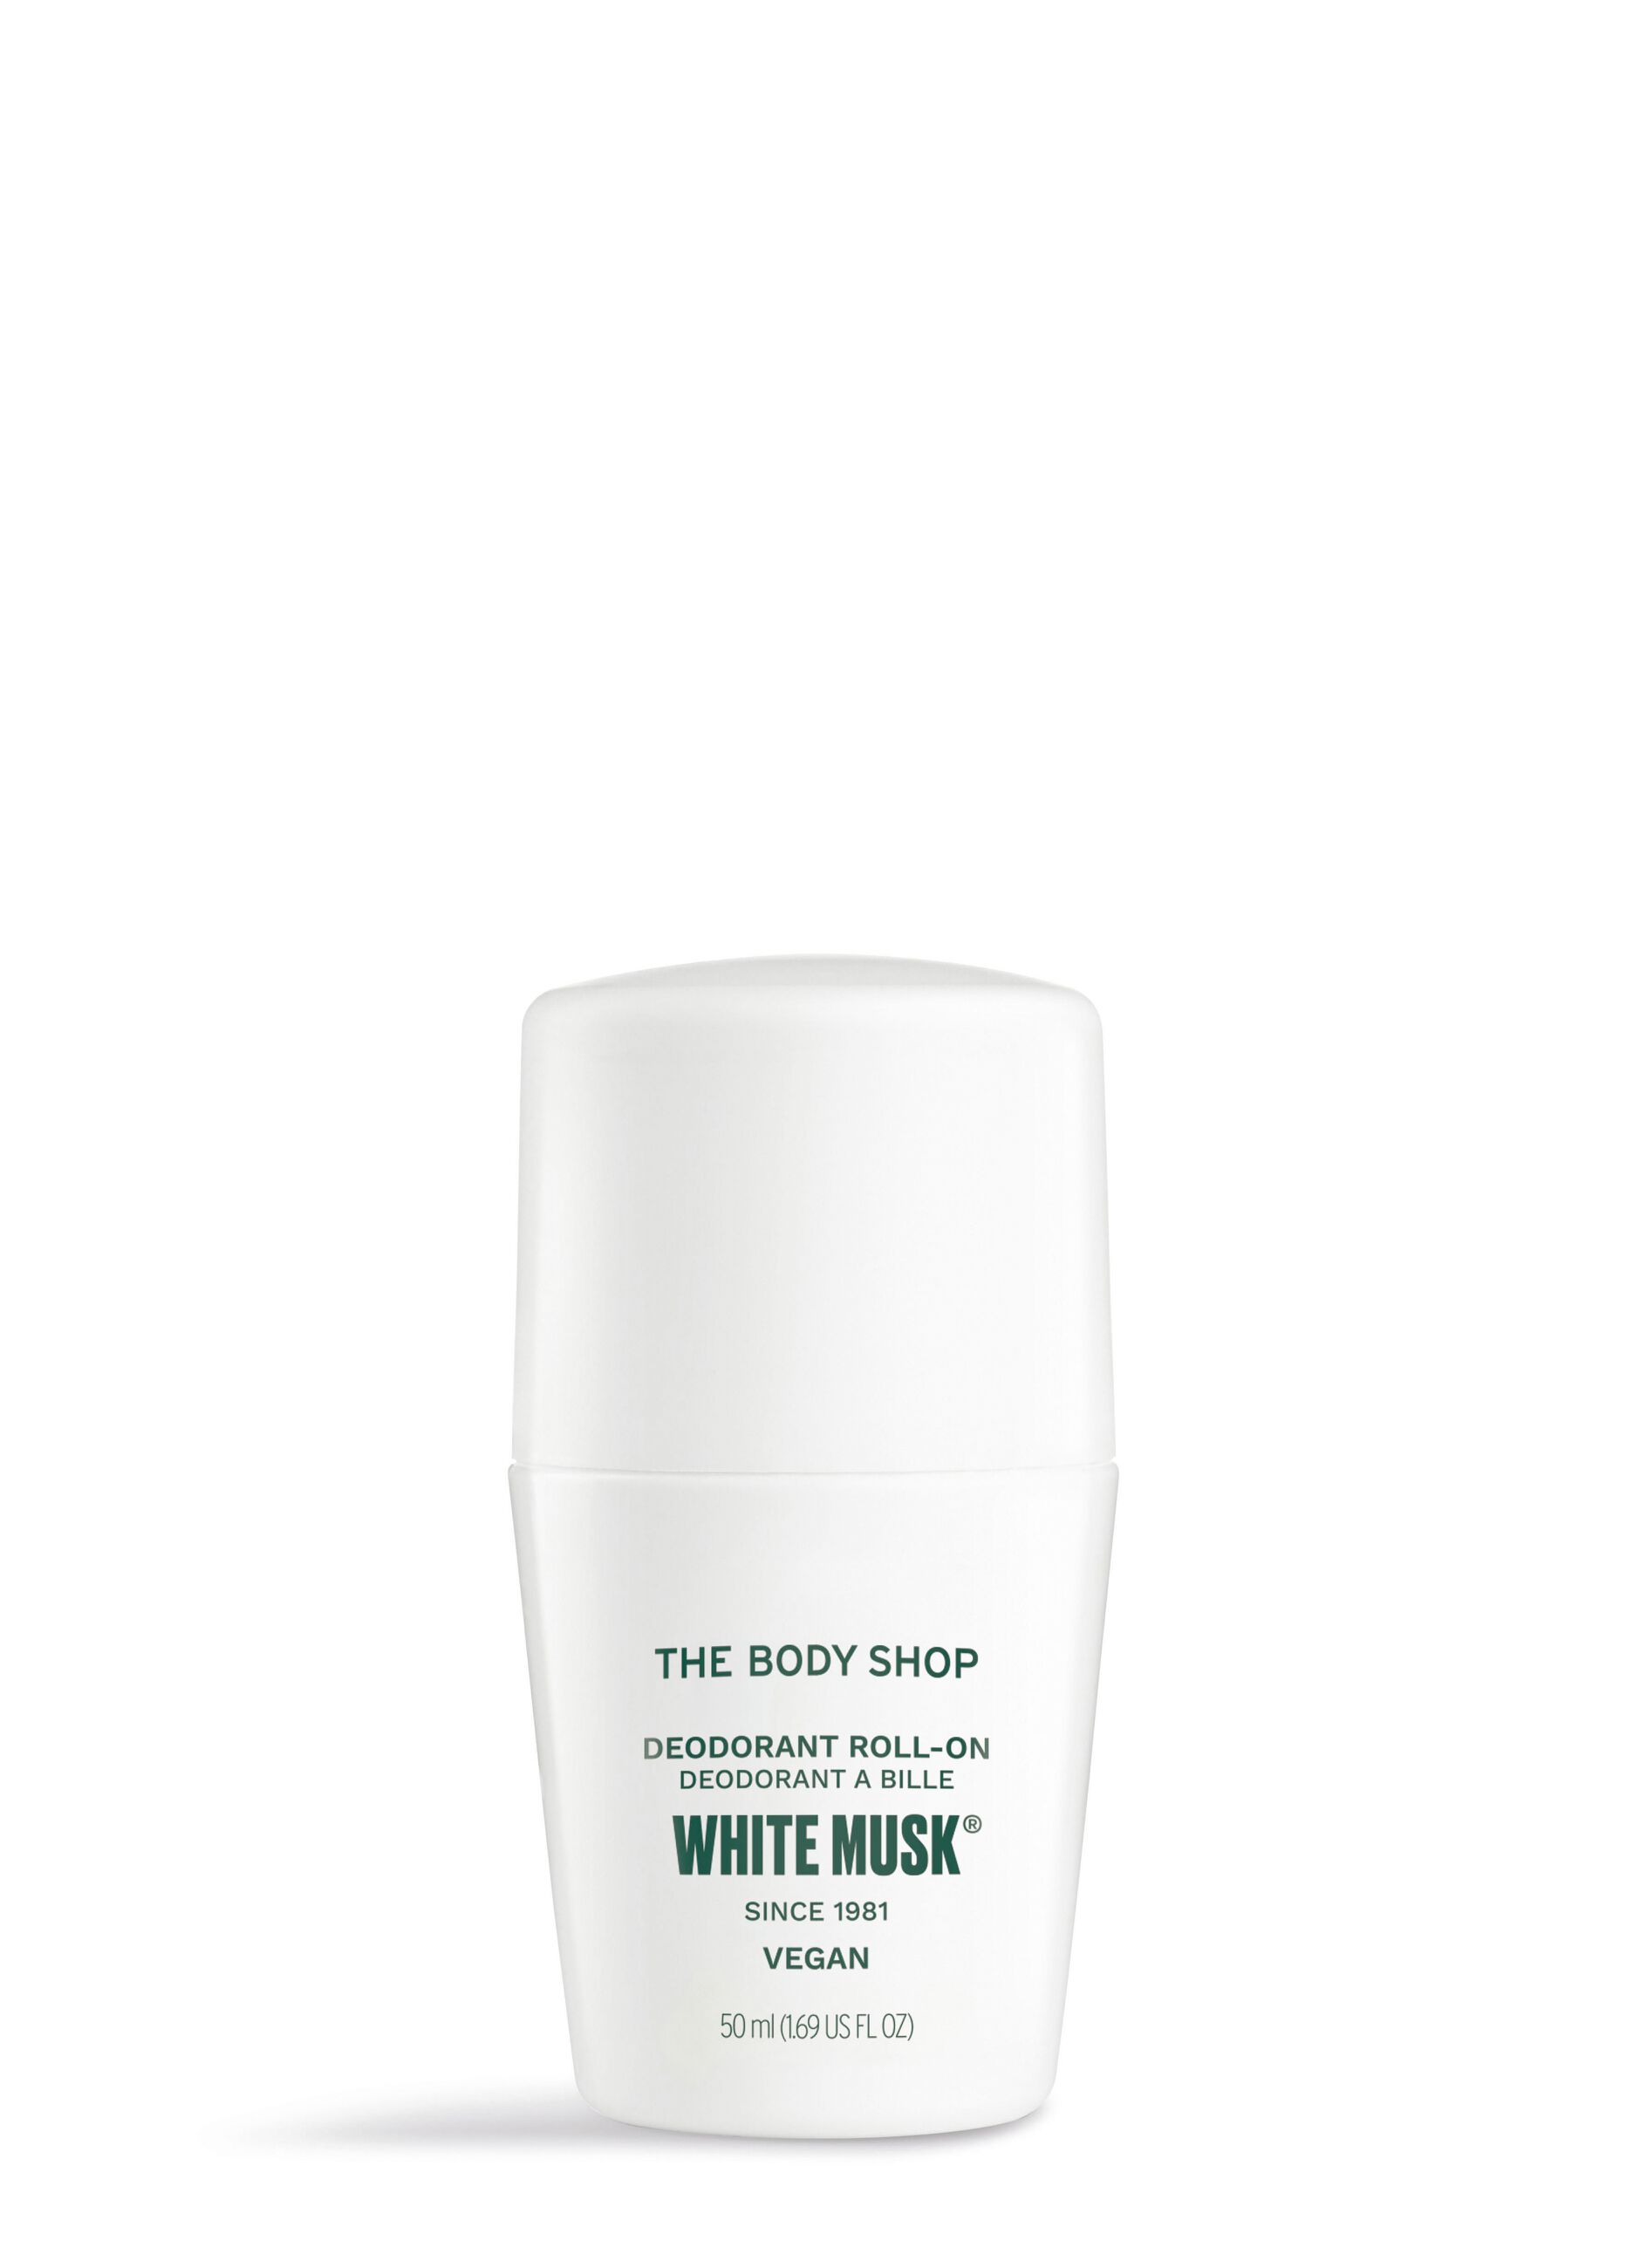 Desodorante White Musk® The Body Shop